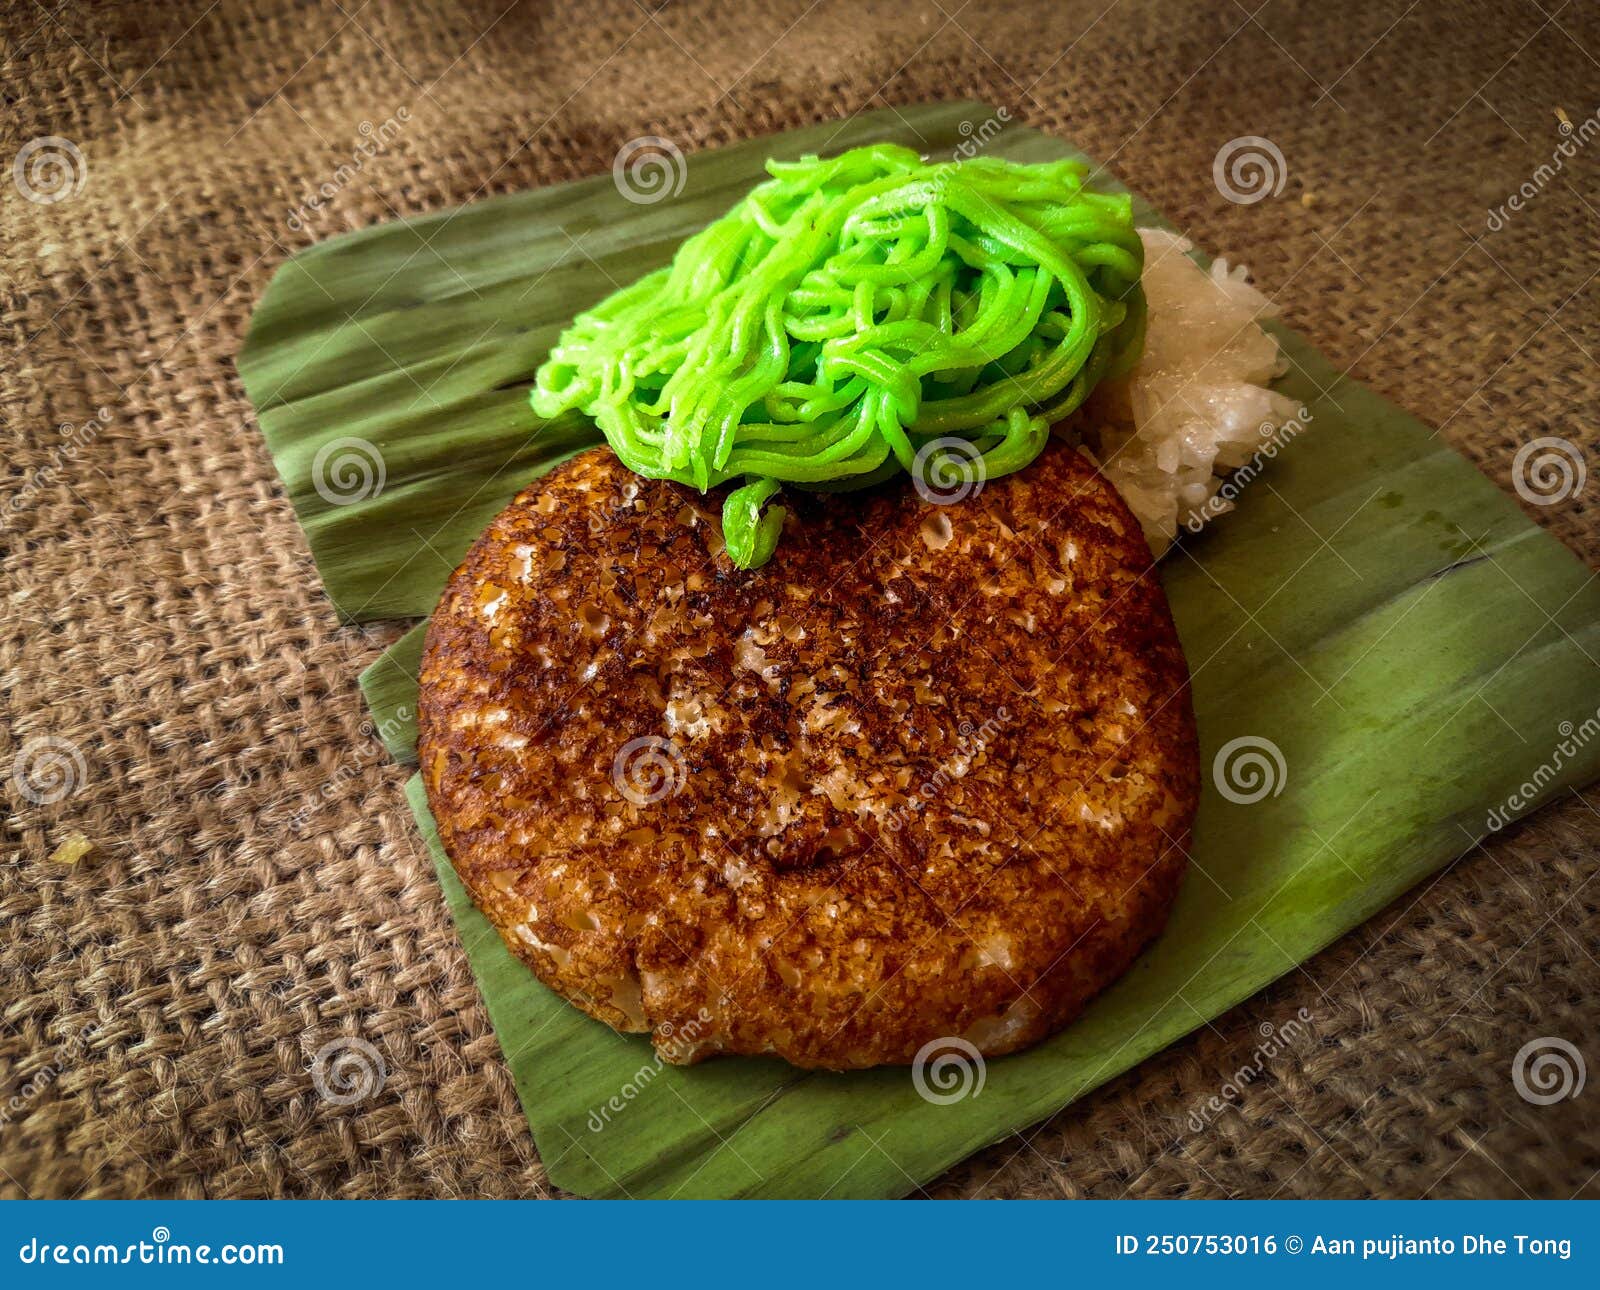 indonesians call it serabi cake. traditional food